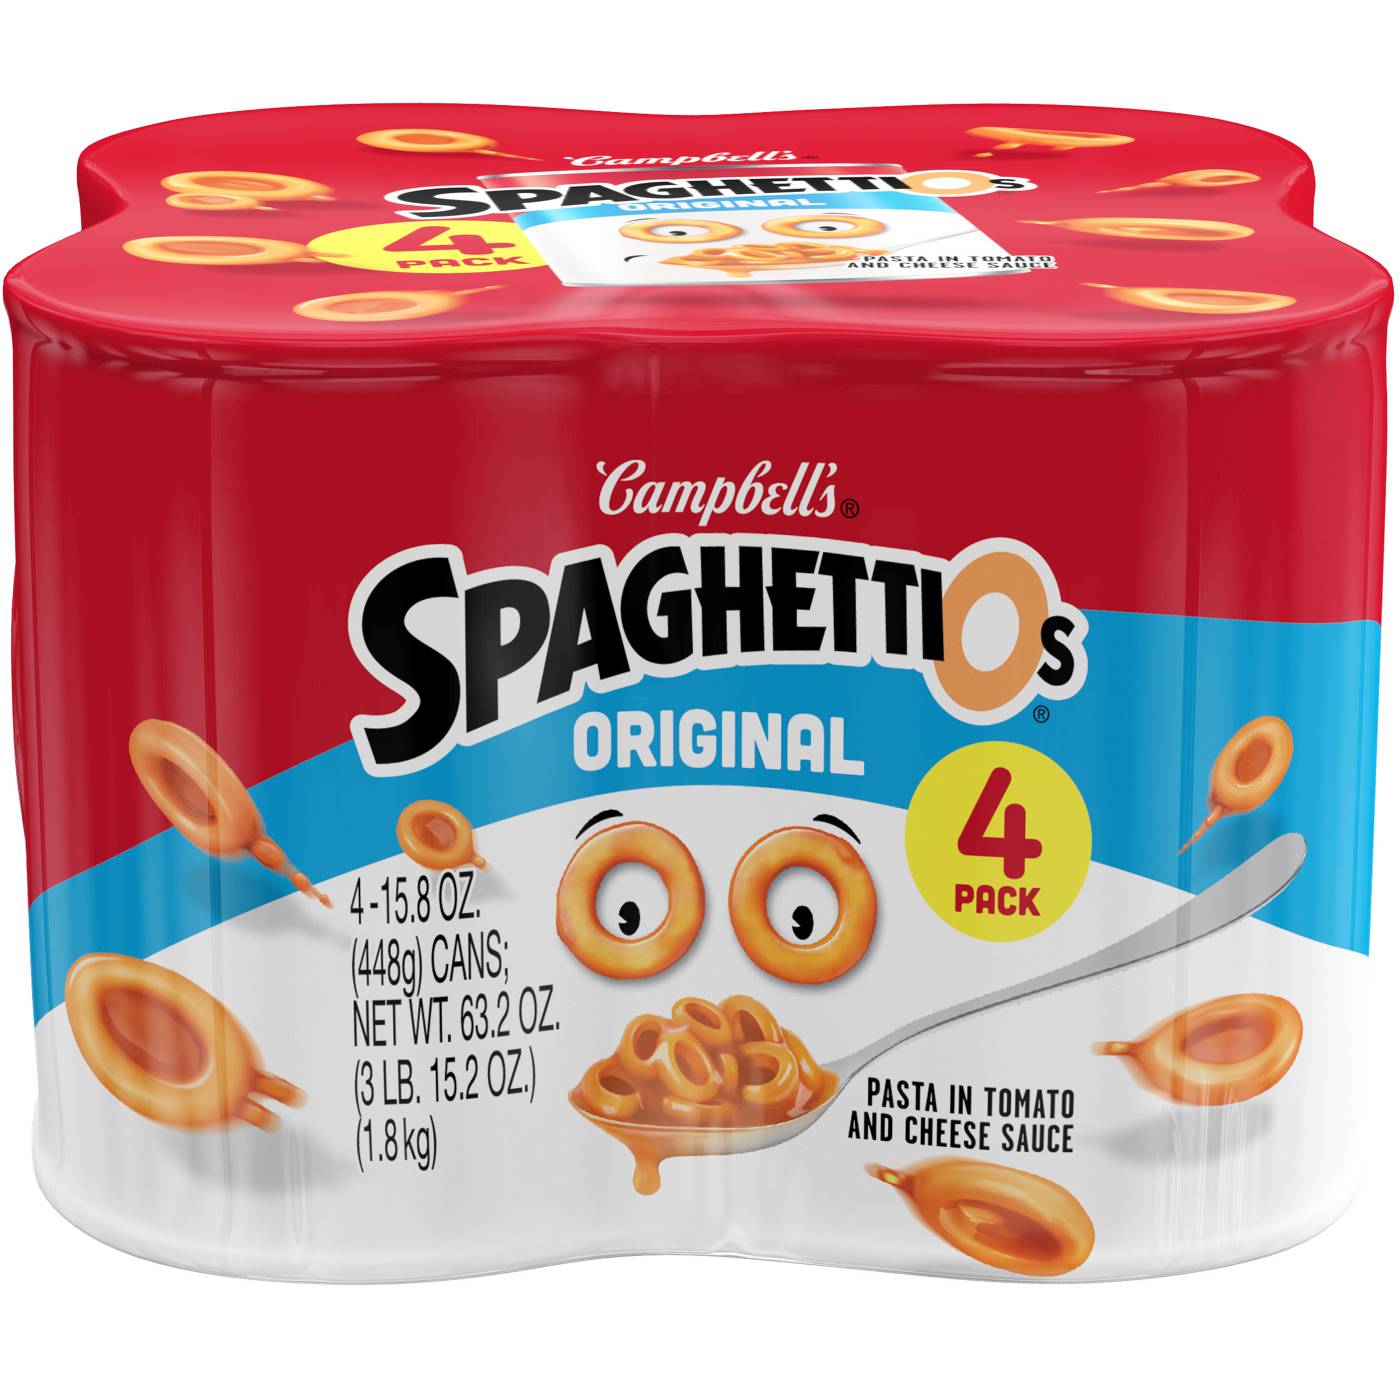 Campbell's SpaghettiOs Original - Shop Pantry Meals at H-E-B